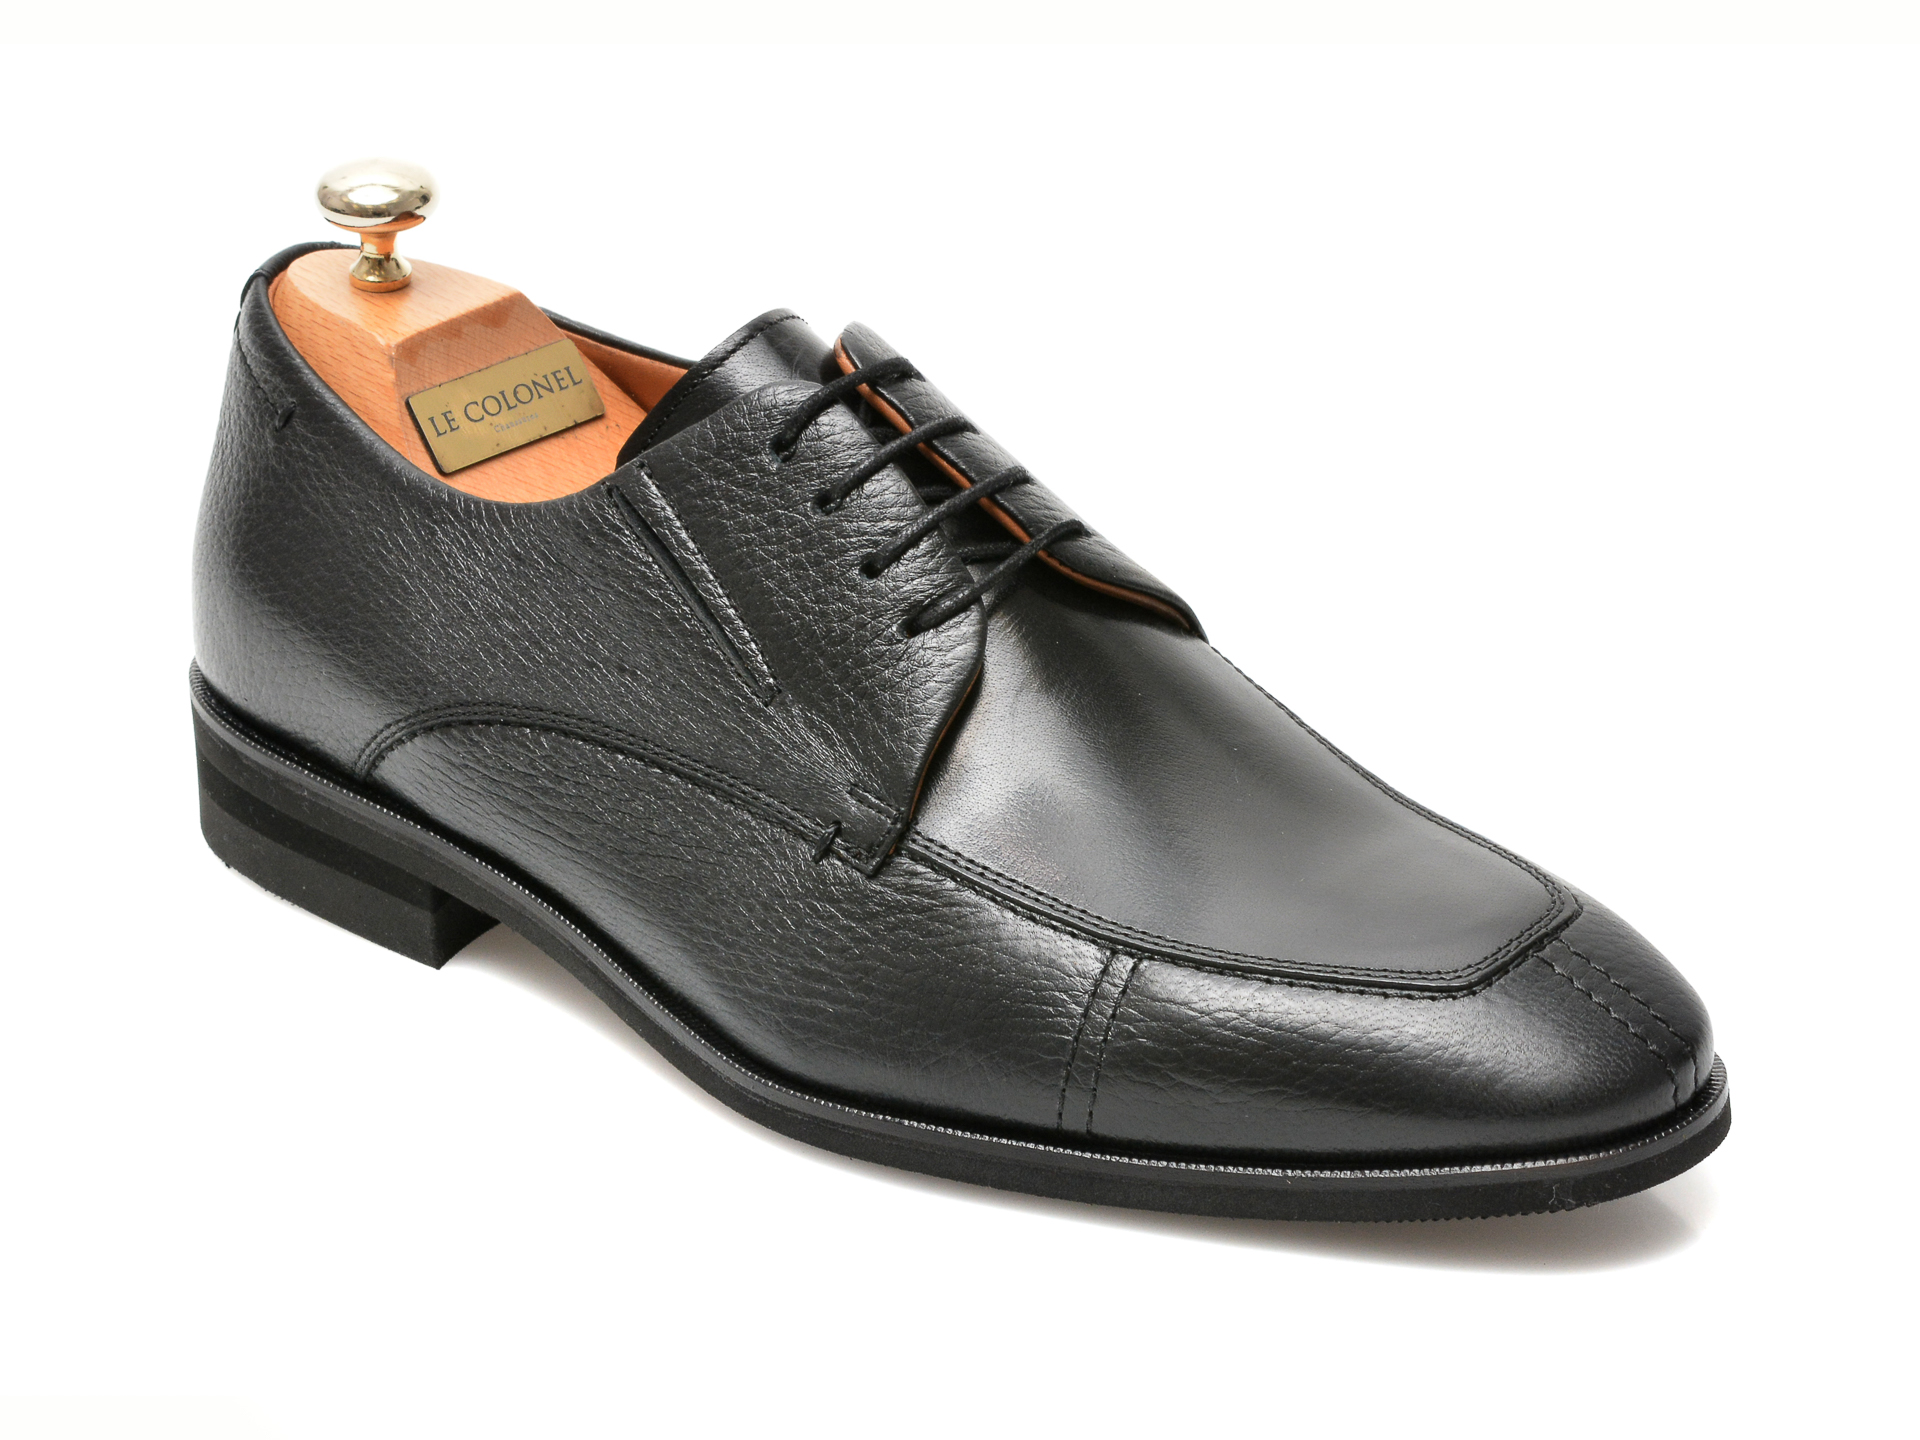 Pantofi LE COLONEL negri, 48761, din piele naturala